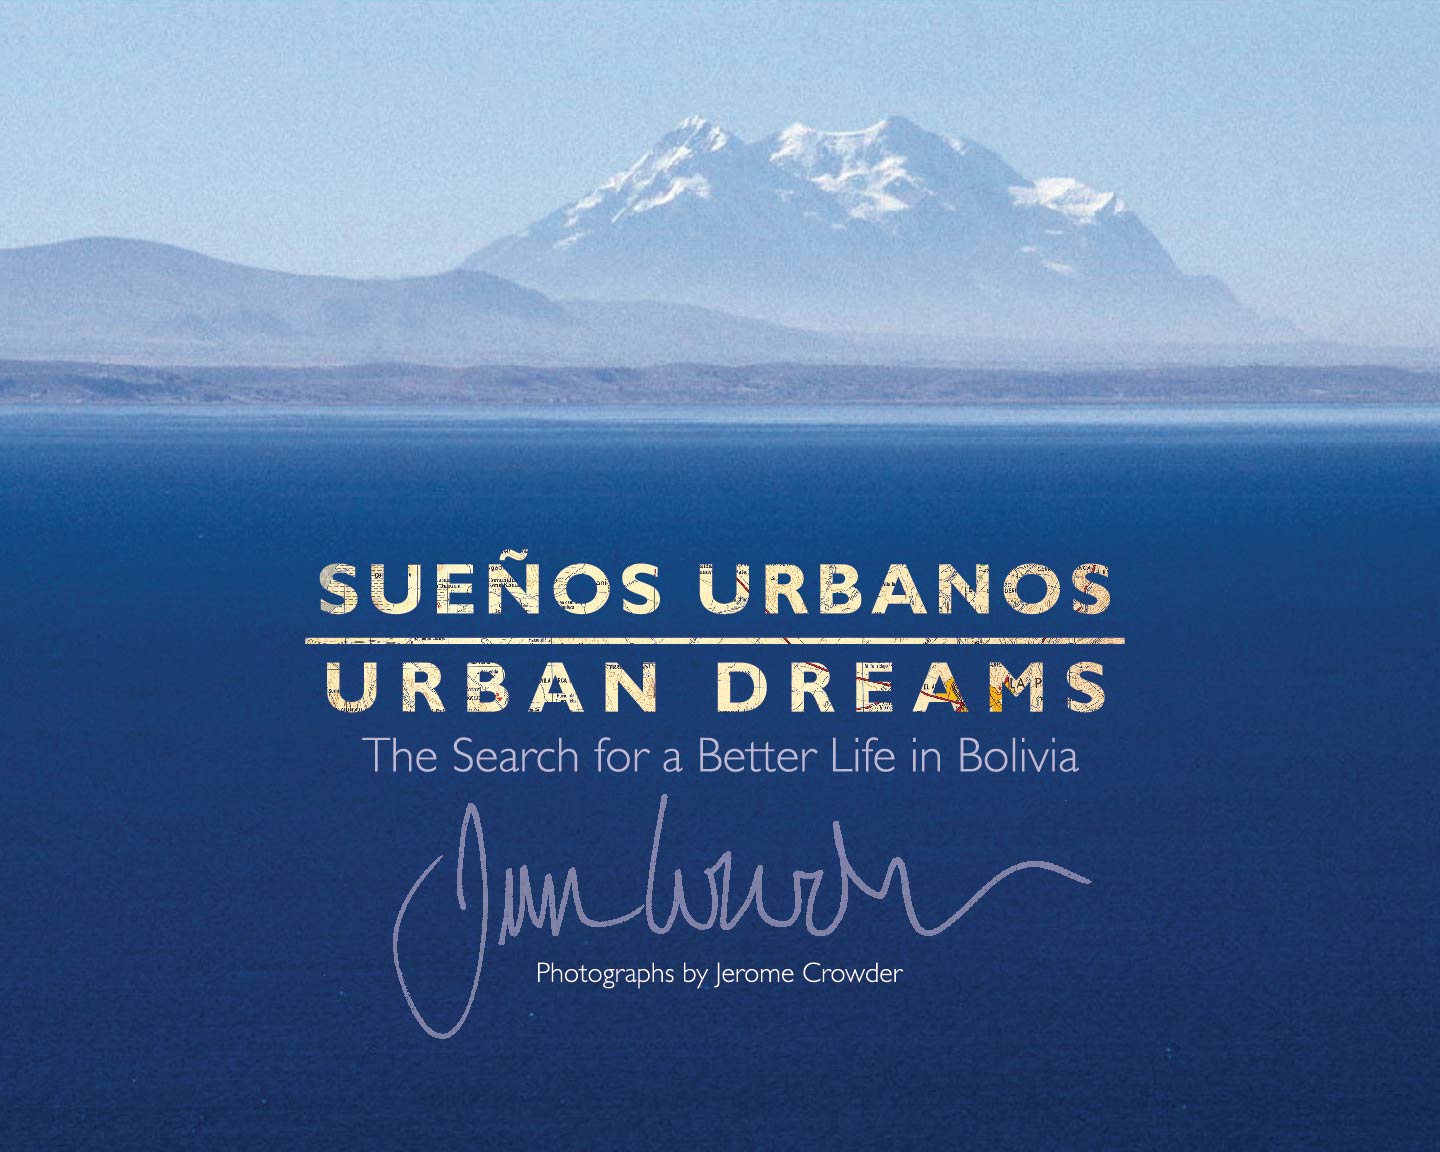 Sueños Urbanos – Urban Dreams follows Alvaro in his journey from a rural community on the Altiplano to his new home in El Alto, near La Paz, Bolivia.